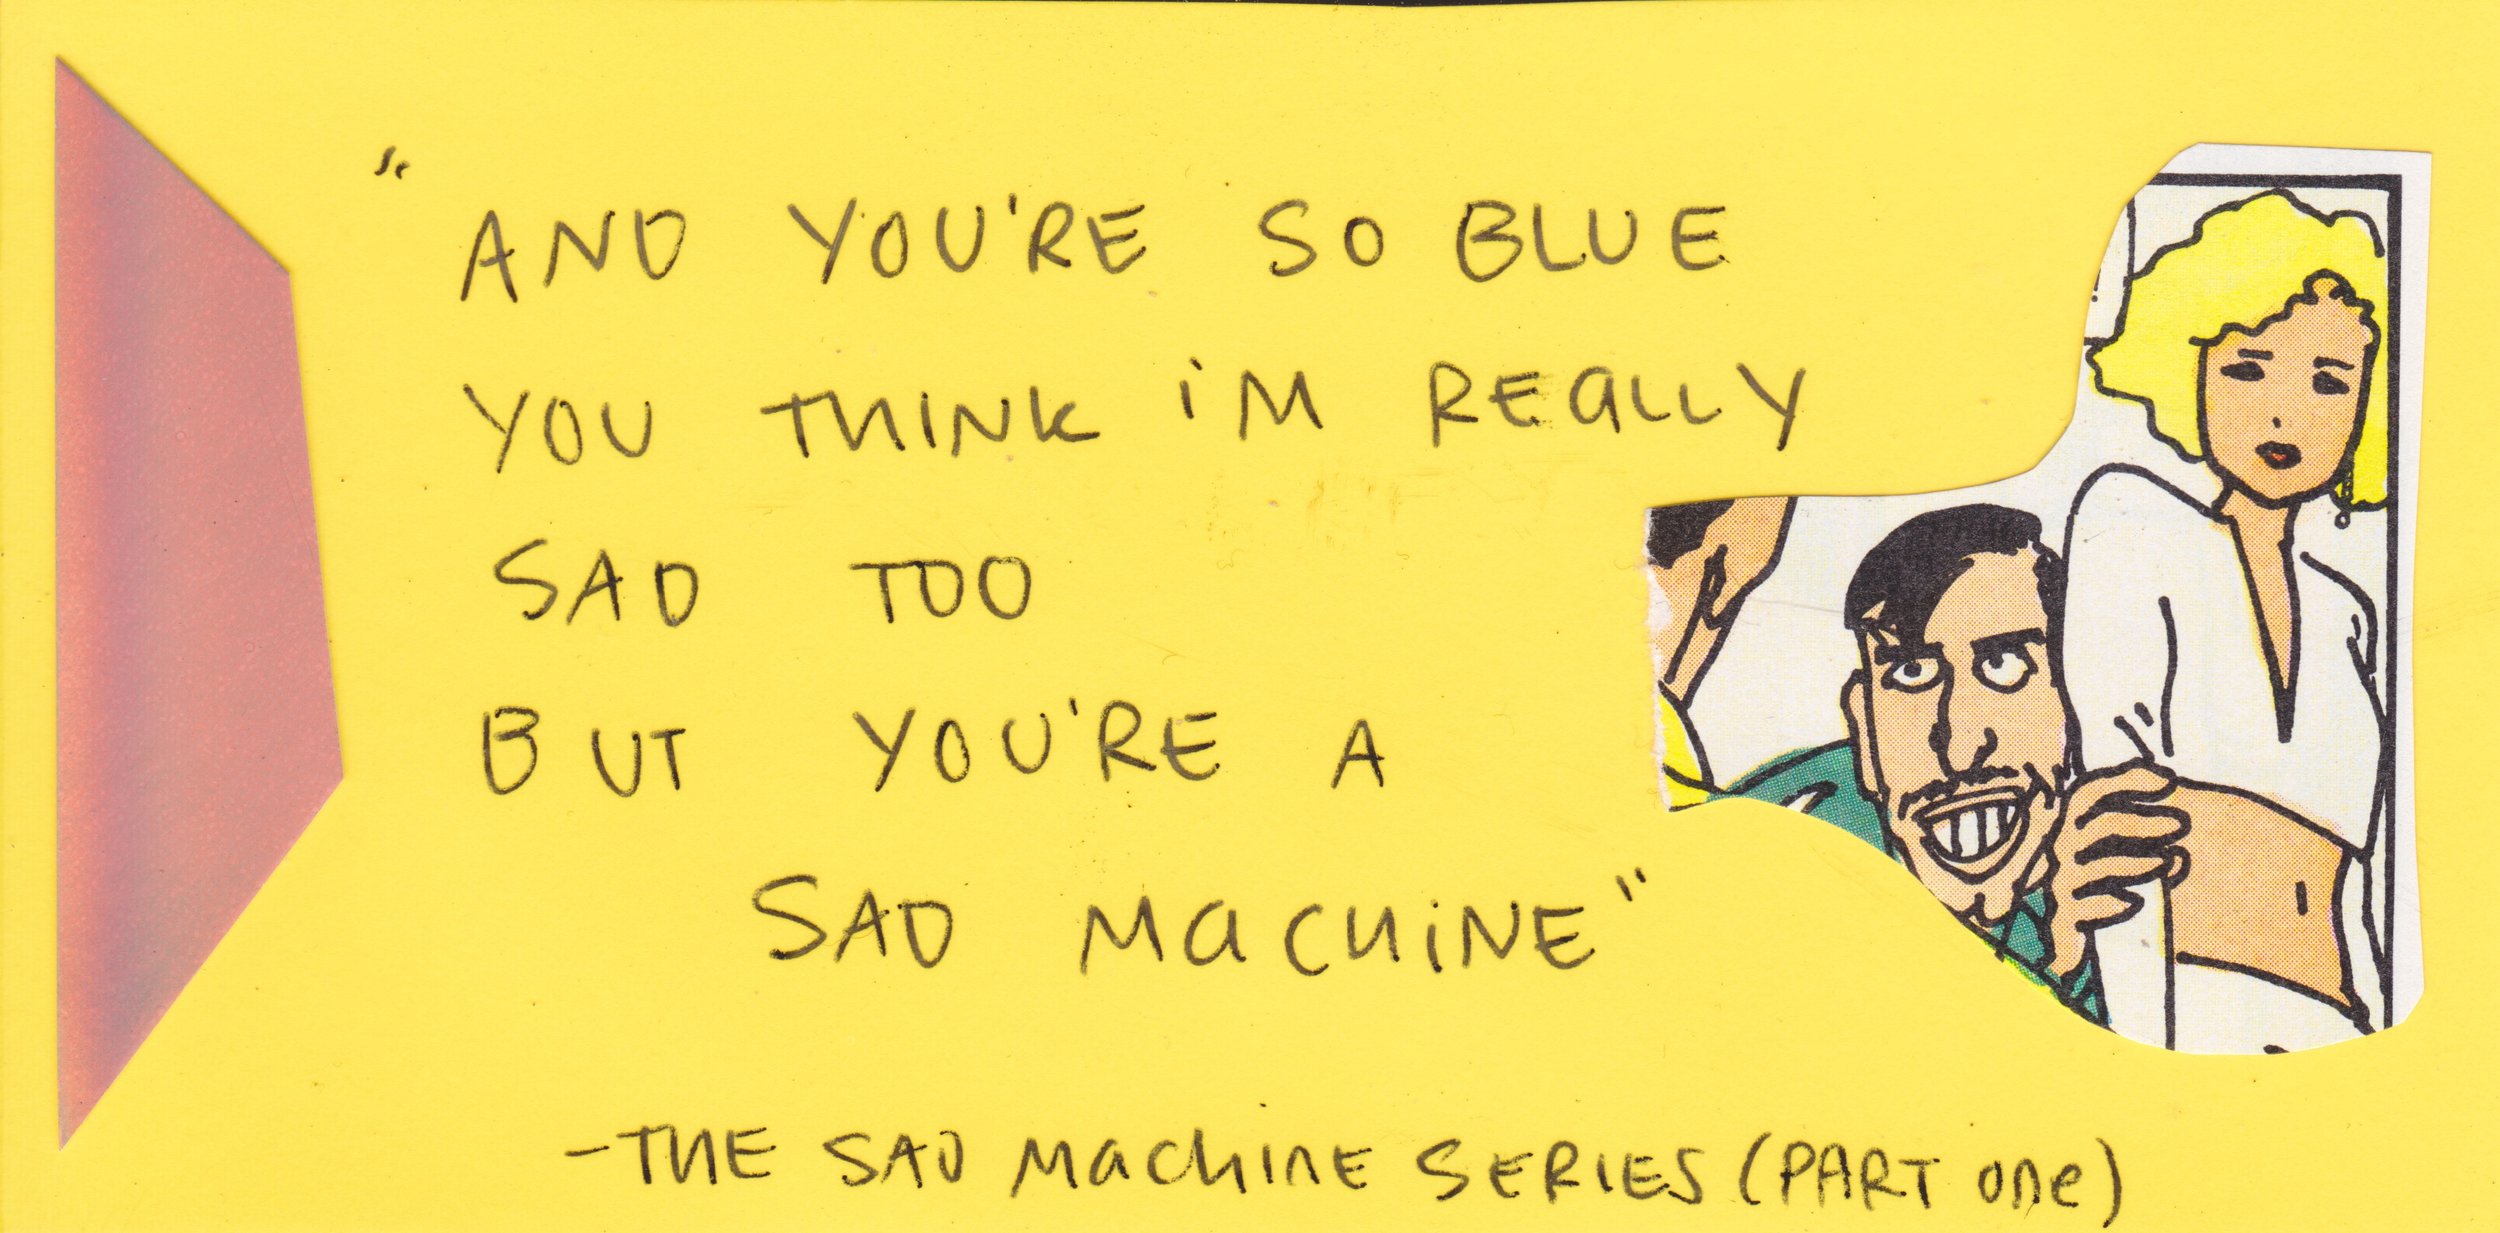 Sad Machine Series Quotes 10.jpeg